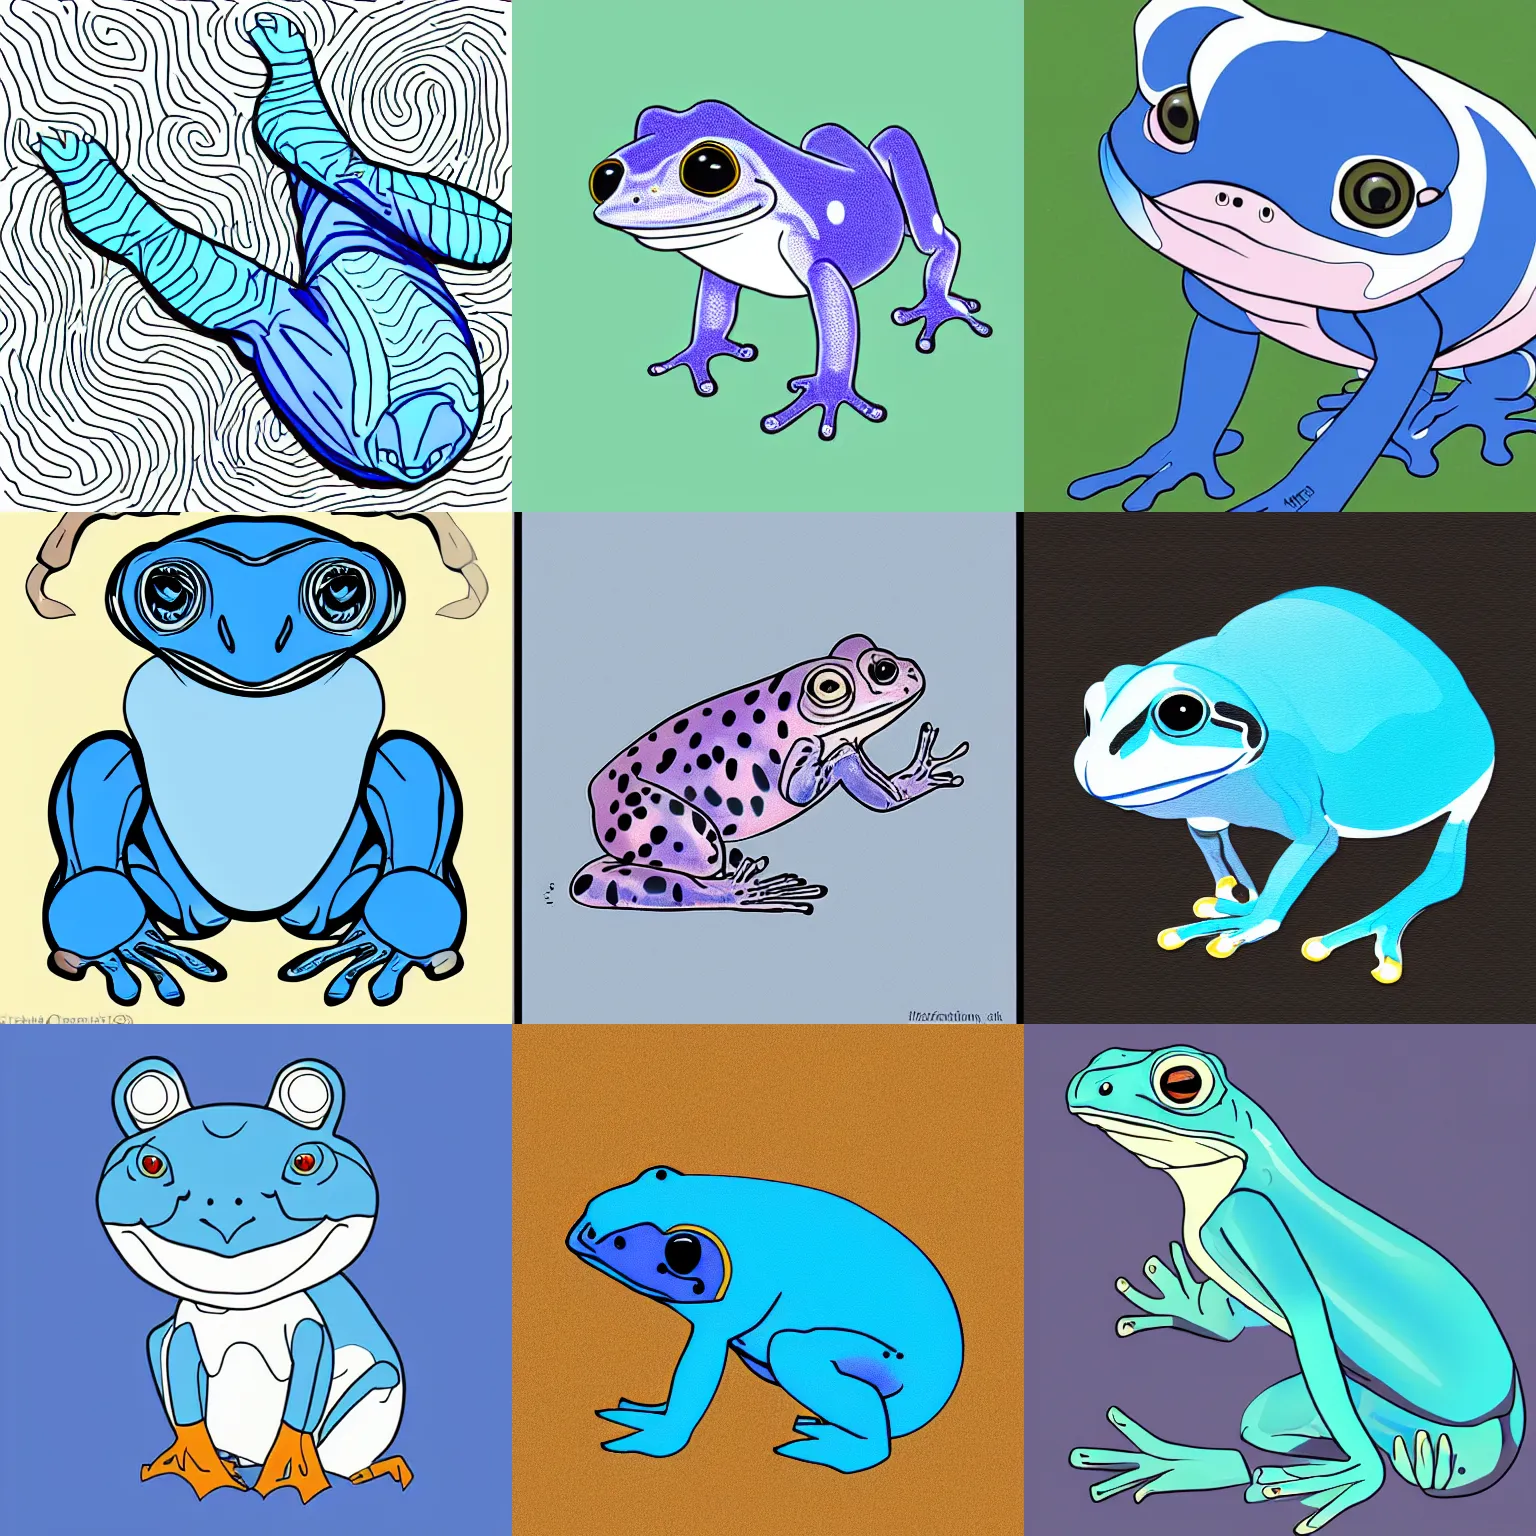 Prompt: Blue-colored Amazon milk frog, digital art, flat colors, clean lines